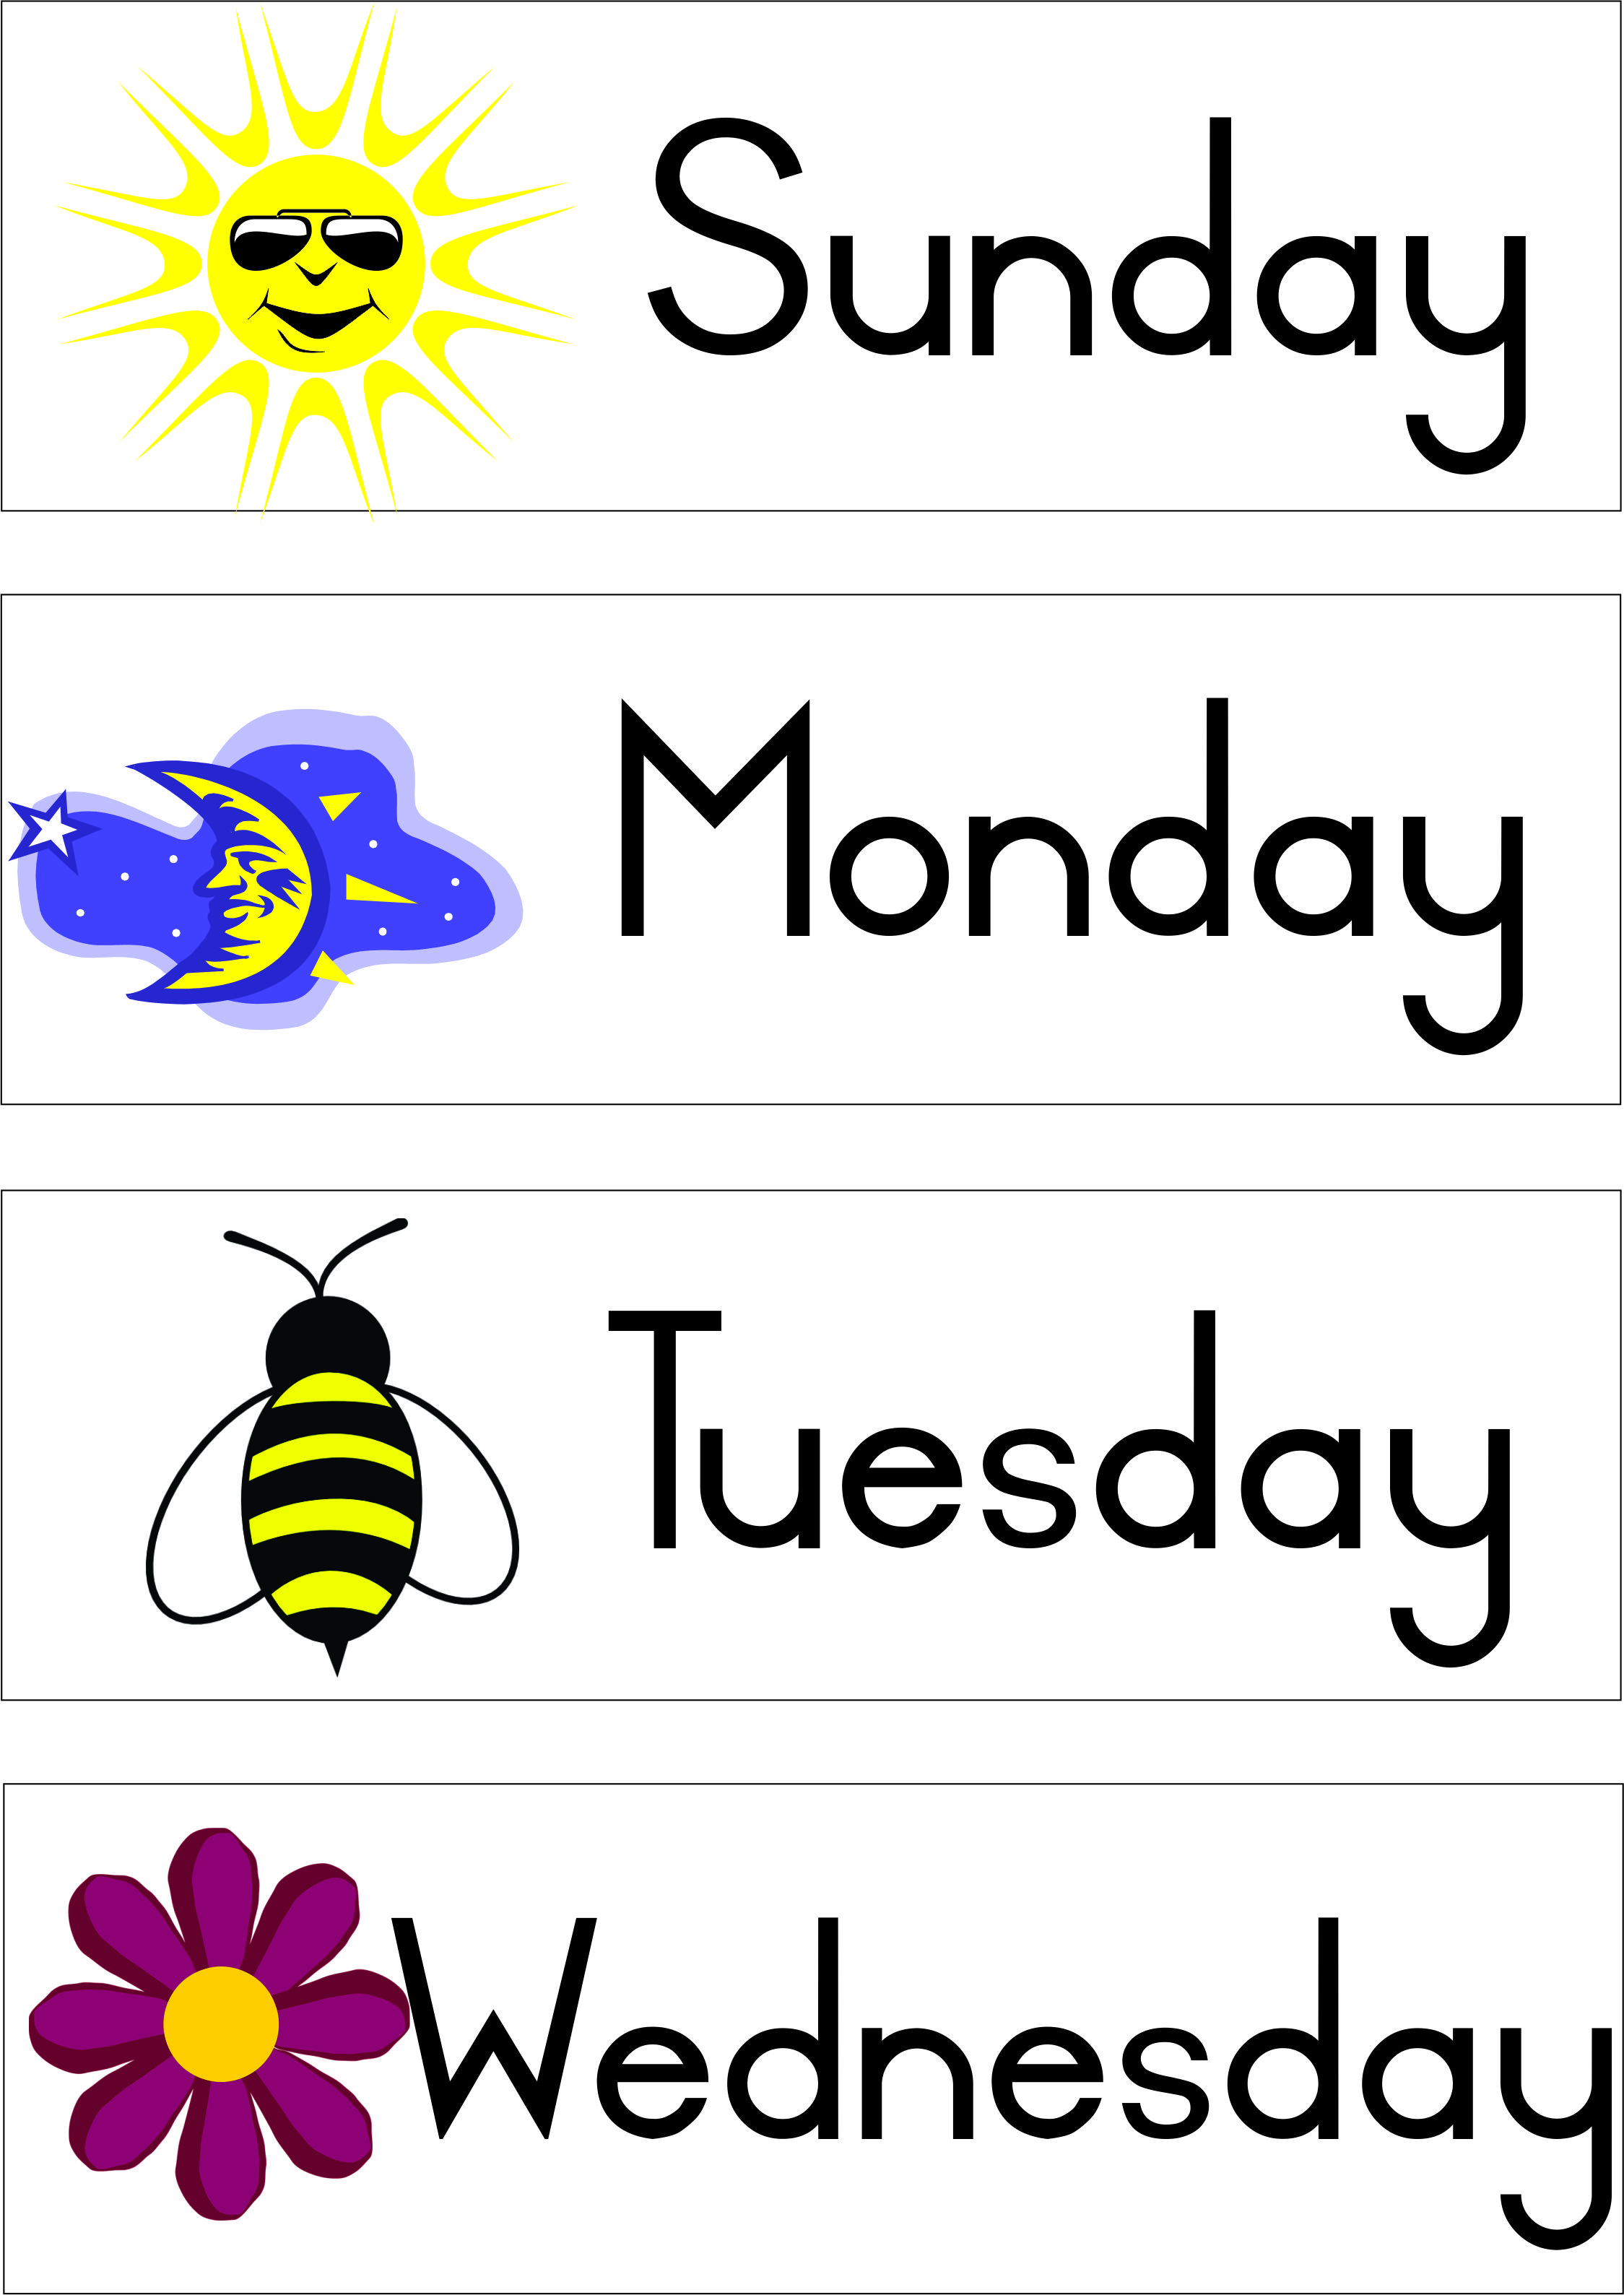 Days of the week Teacha!